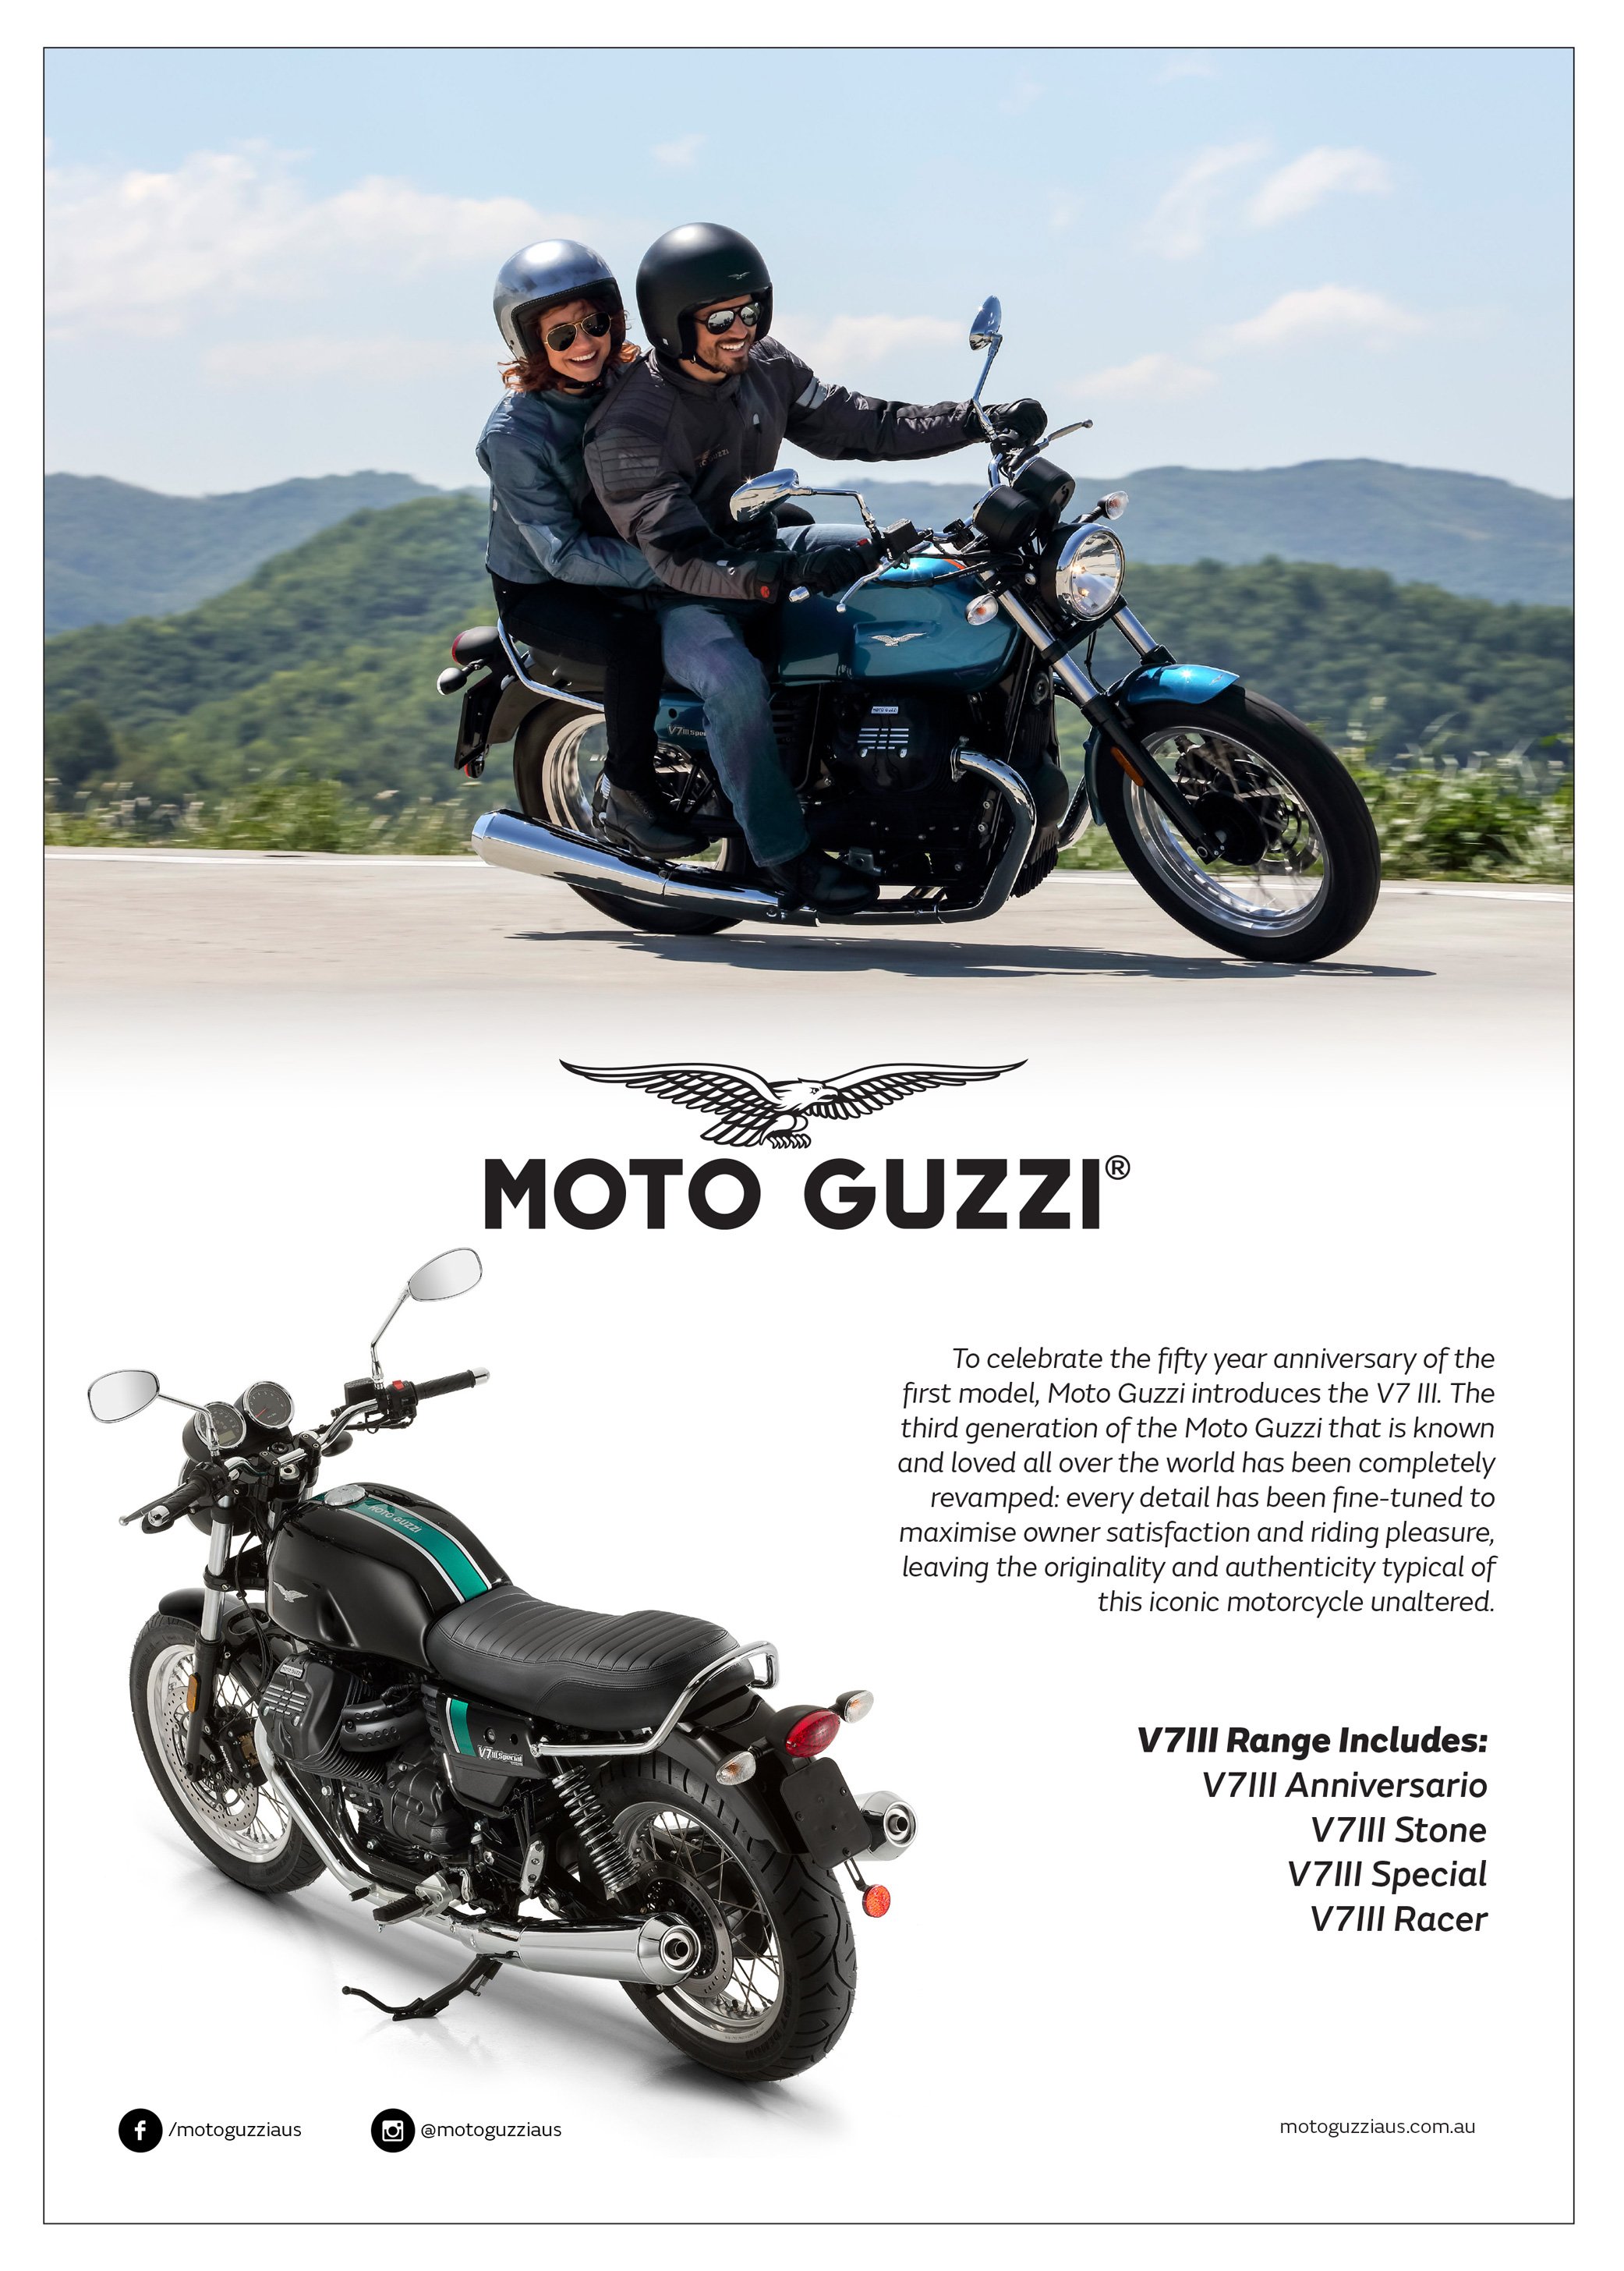 Moto Guzzi V7III launch ad placement